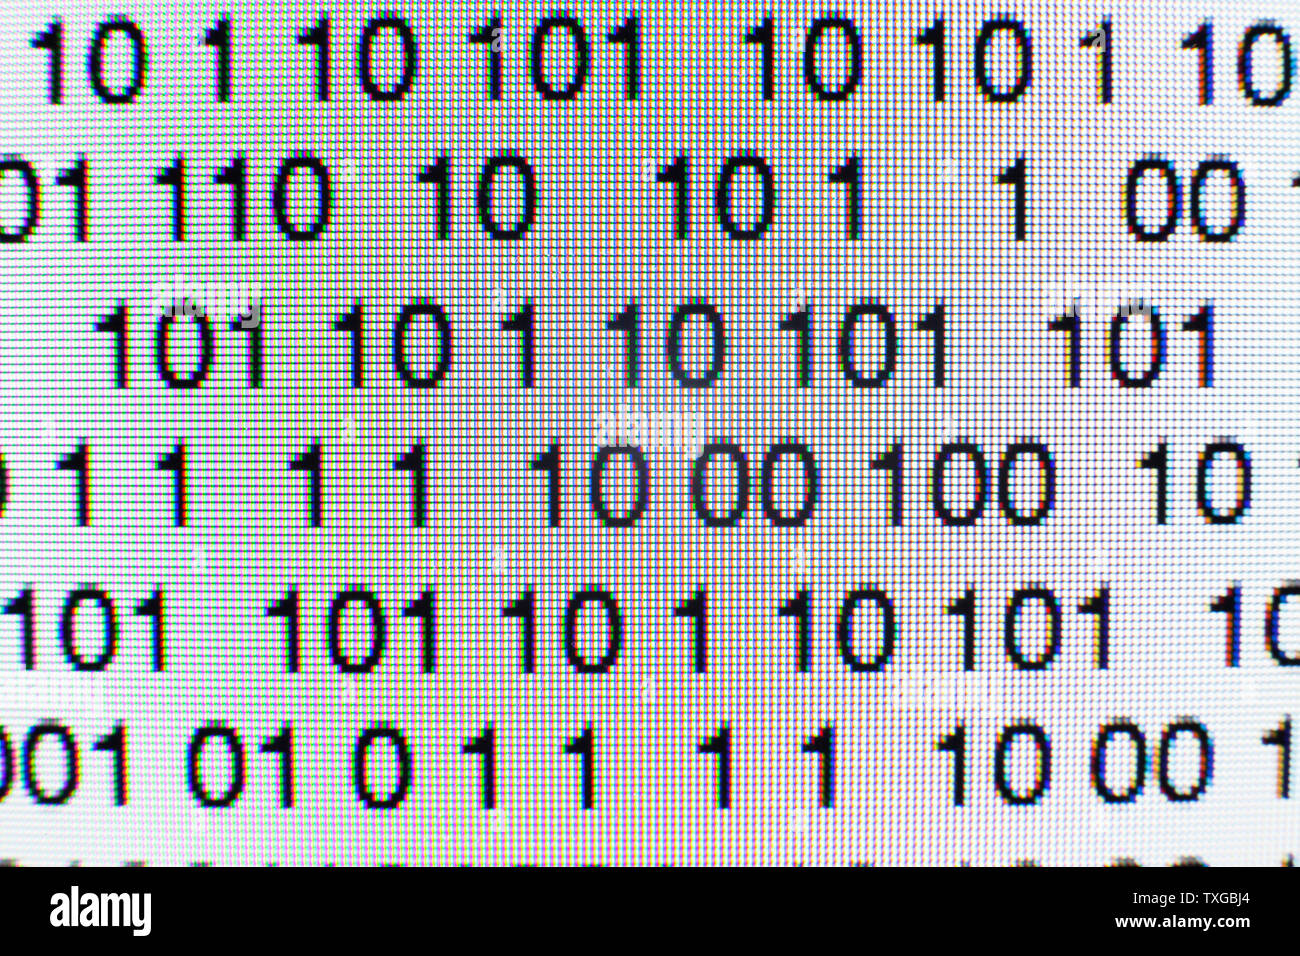 Binary code on a computer screen Stock Photo